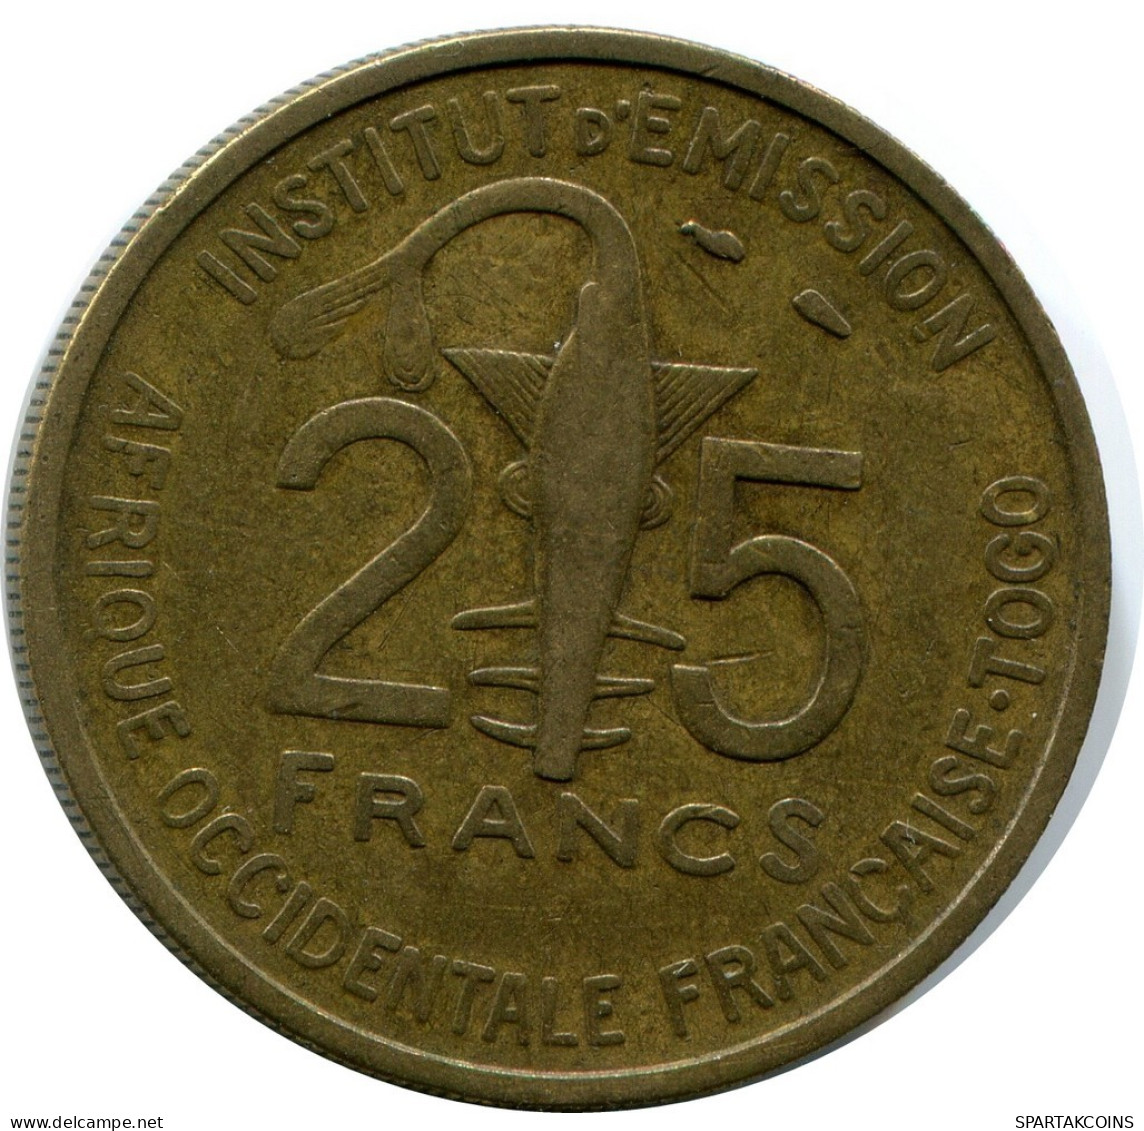 25 FRANCS 1957 TOGO Coin #AP883.U.A - Togo